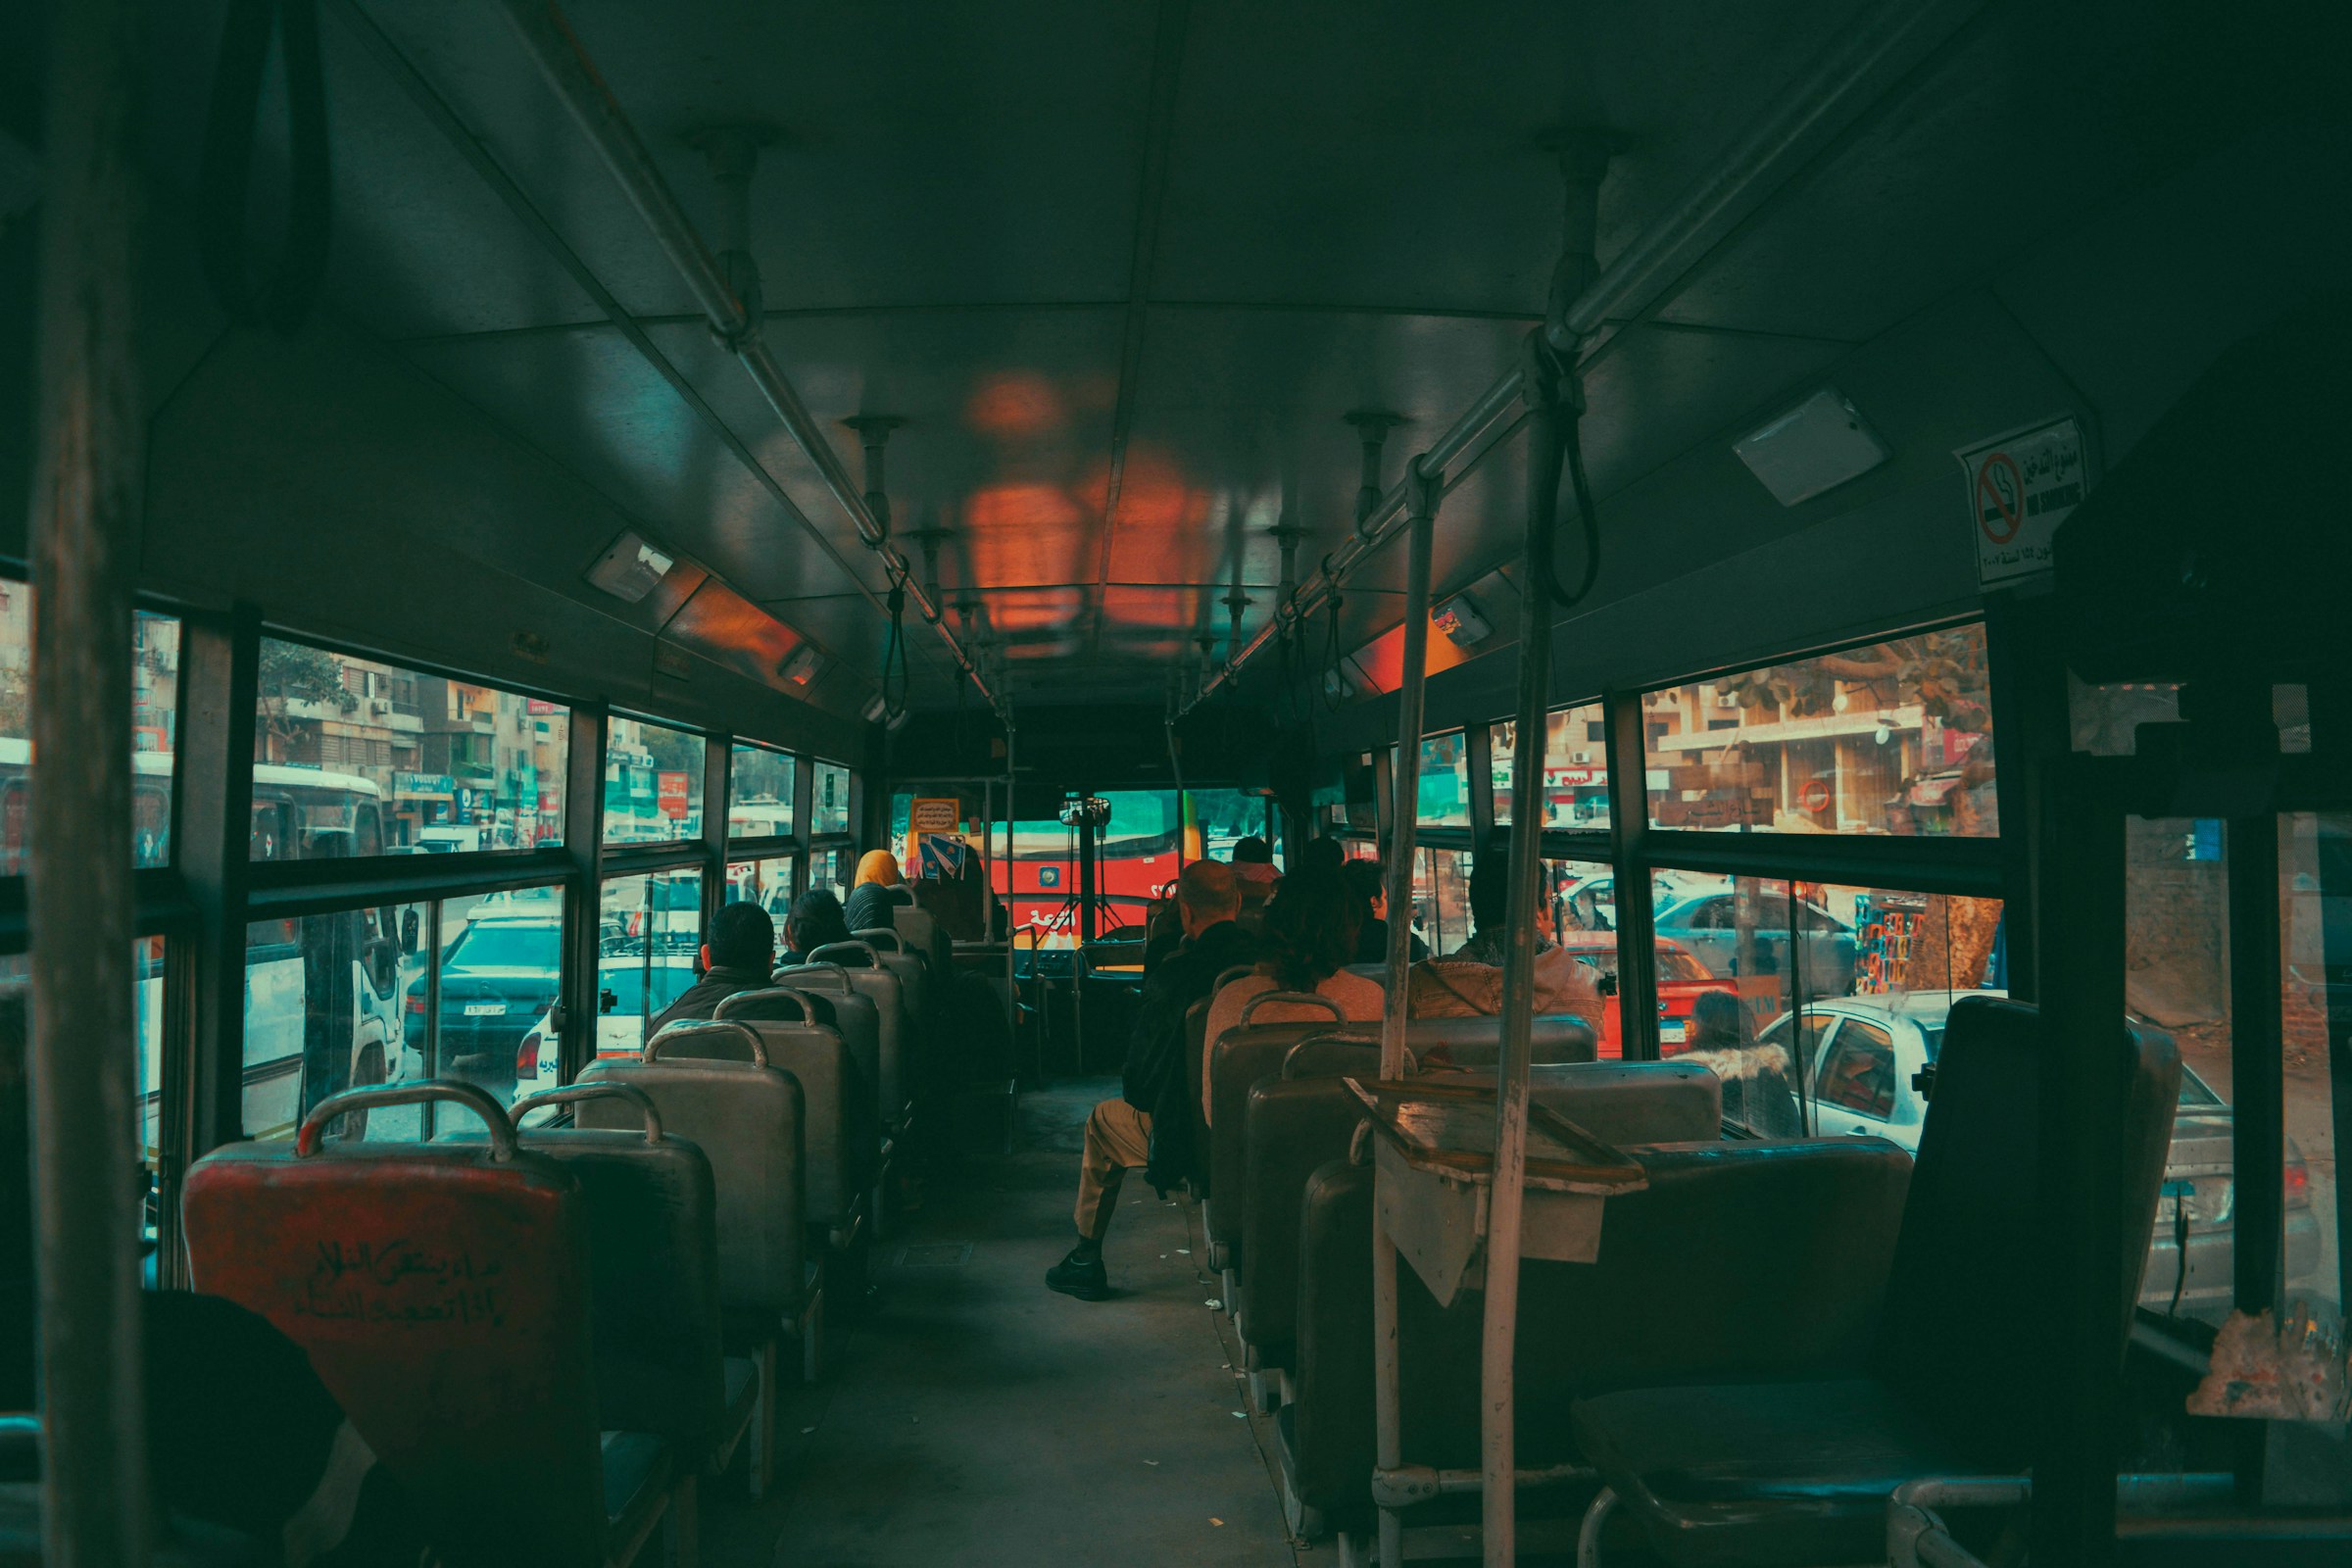 Passengers in a bus | Source: Pexels